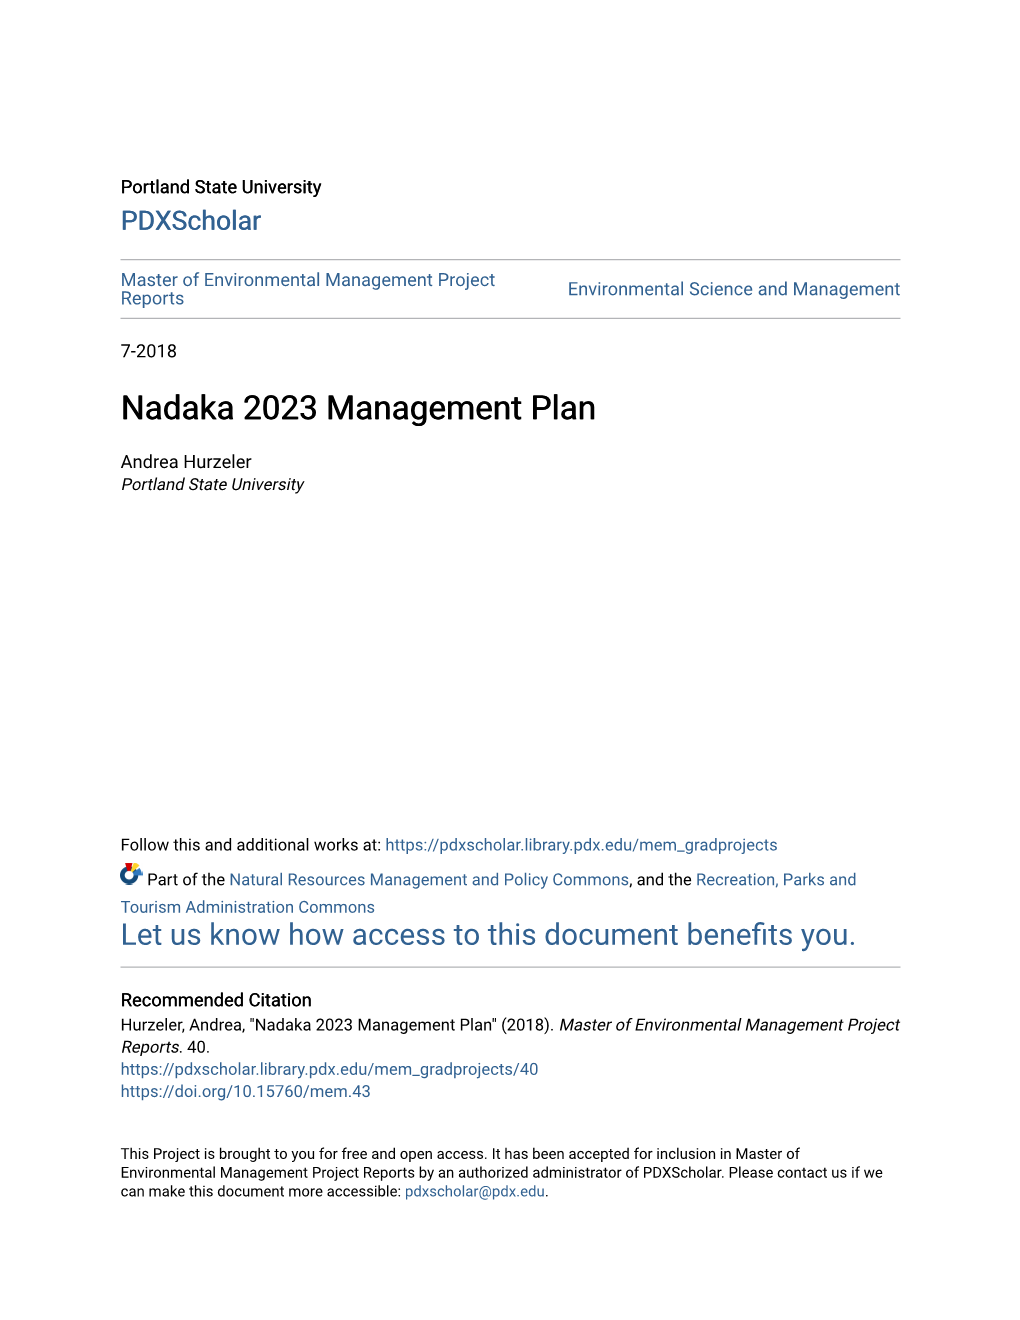 Nadaka 2023 Management Plan